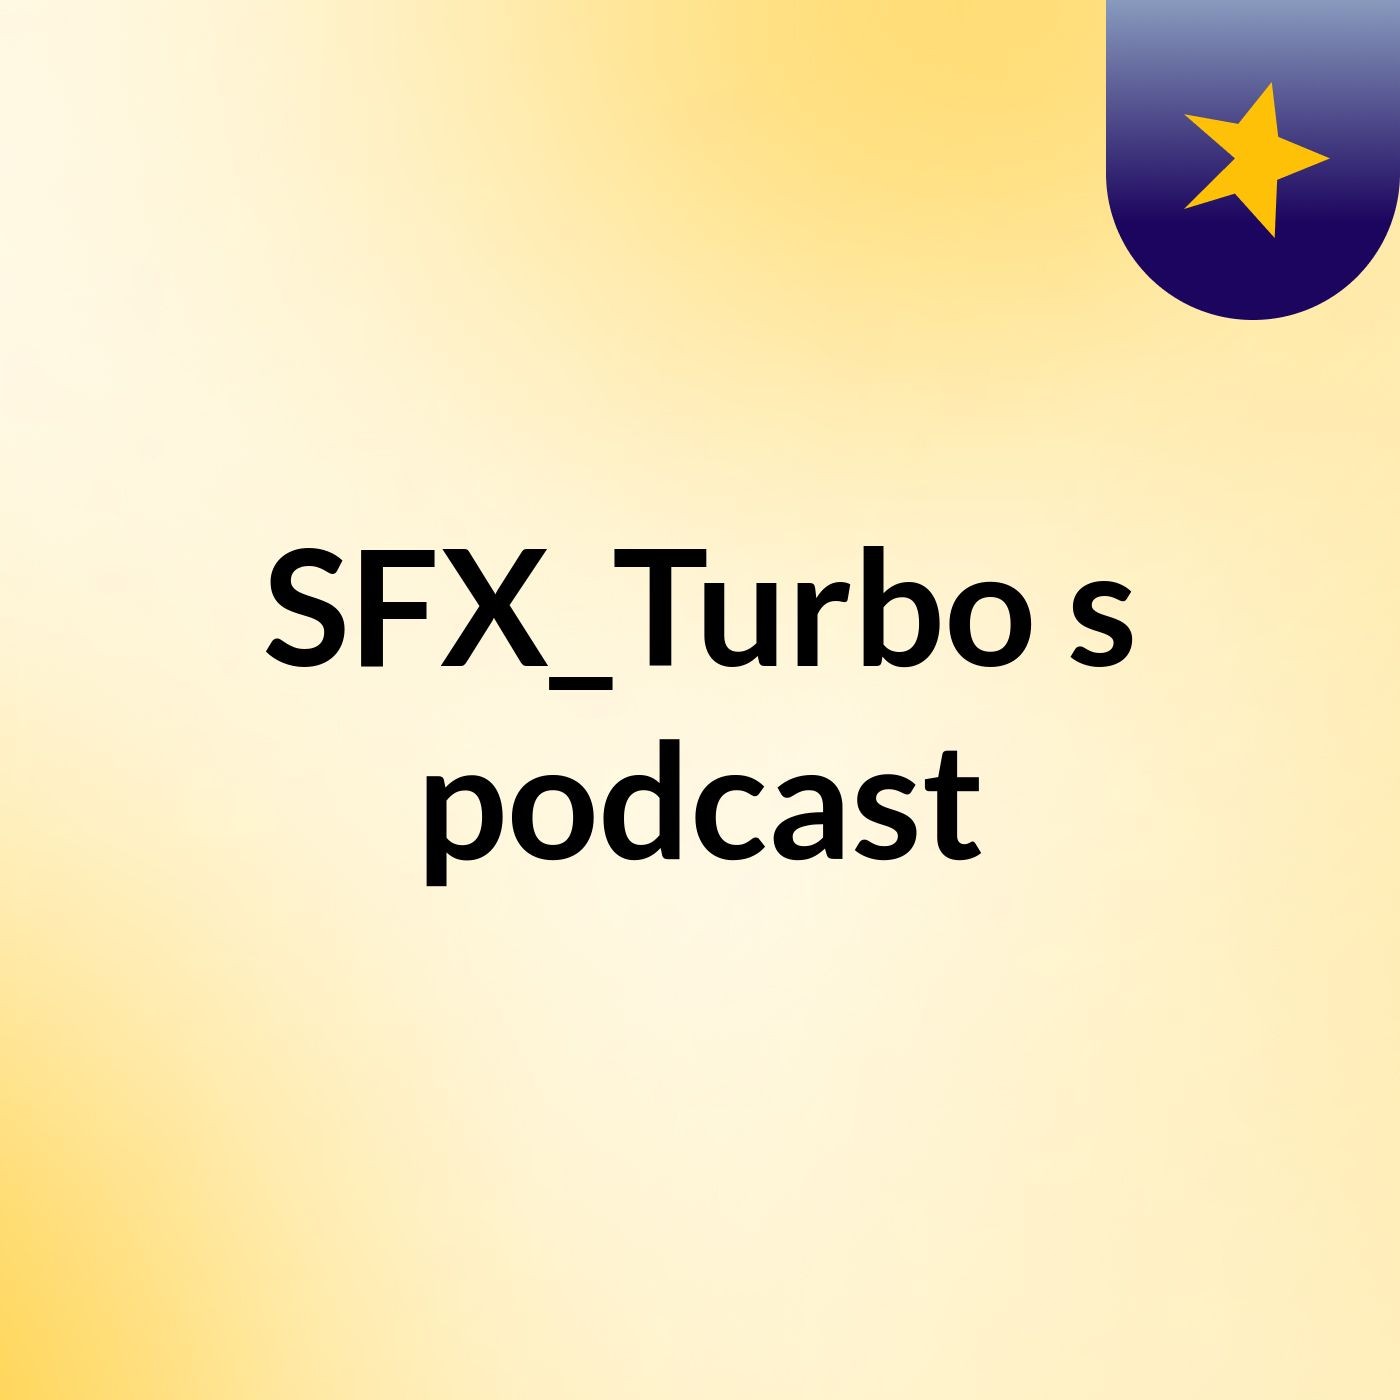 Episode 2 - SFX_Turbo's podcast